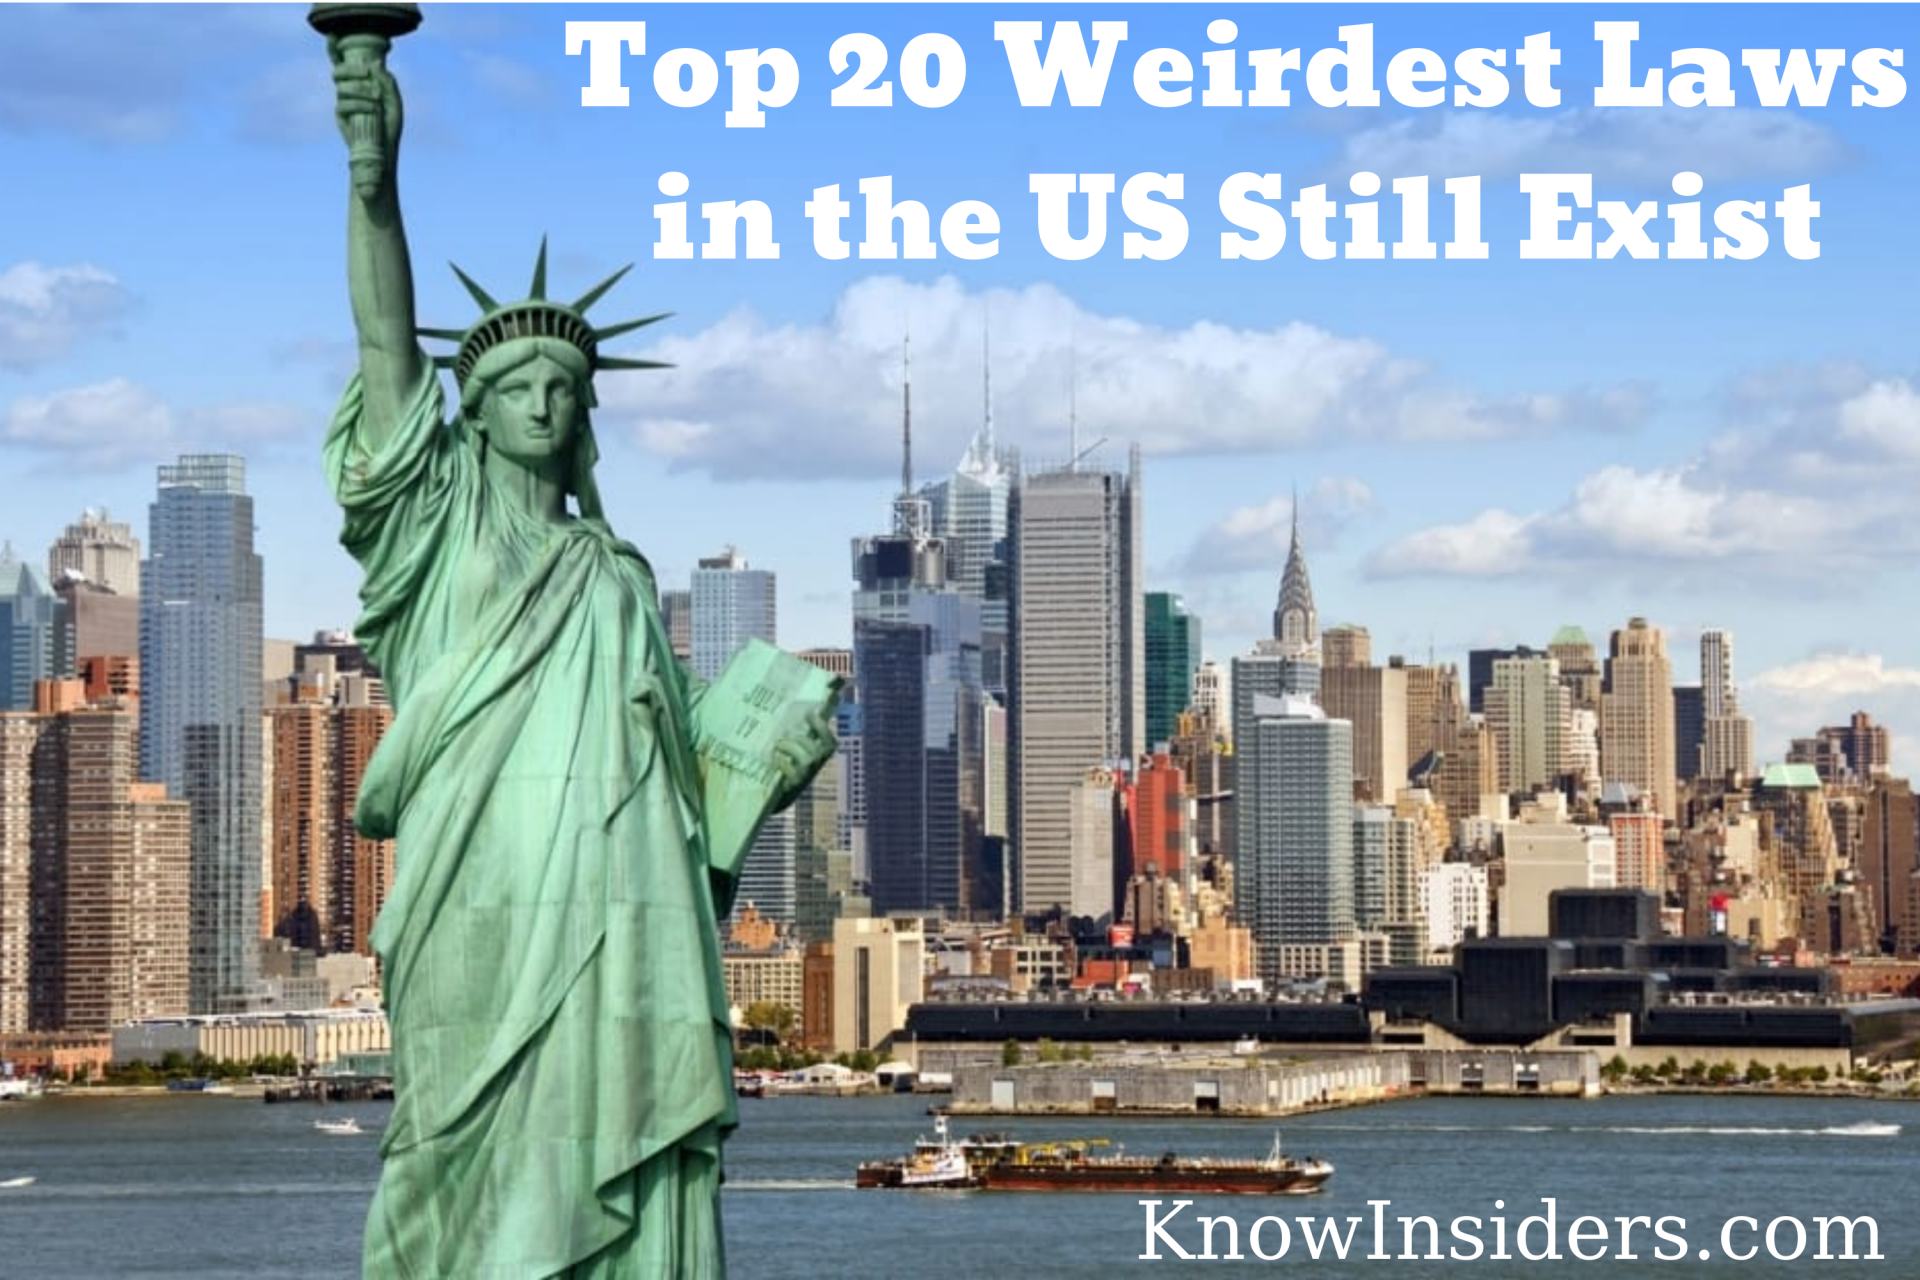 Top 20 Weirdest Laws in the US That Still Exist